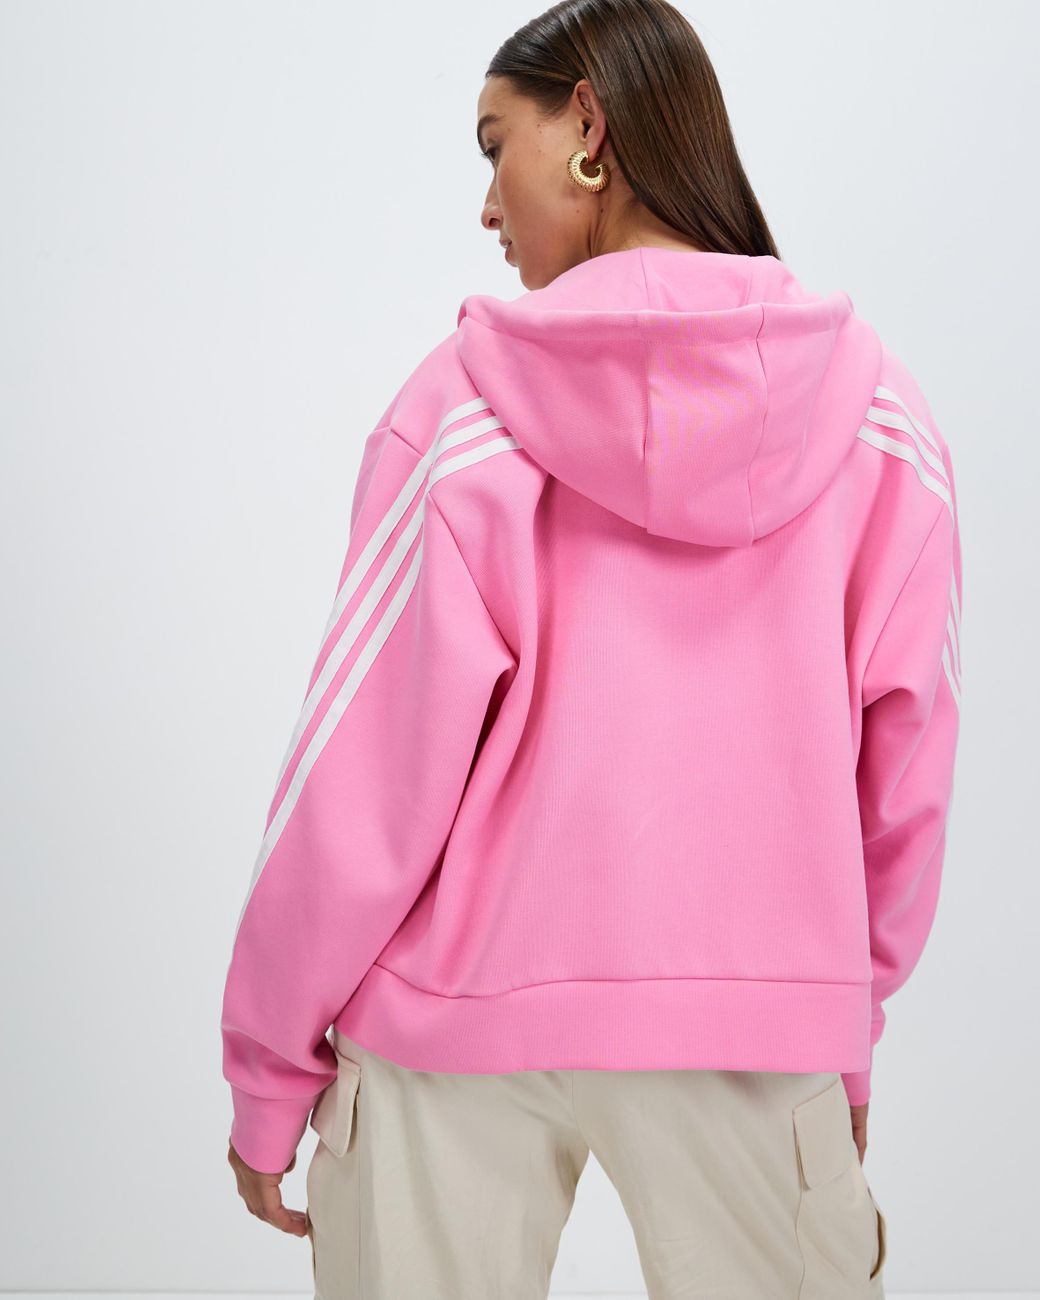 adidas Sportswear in Future Hoodie Zip Lyst Icons Stripes | Pink Australia 3 Full